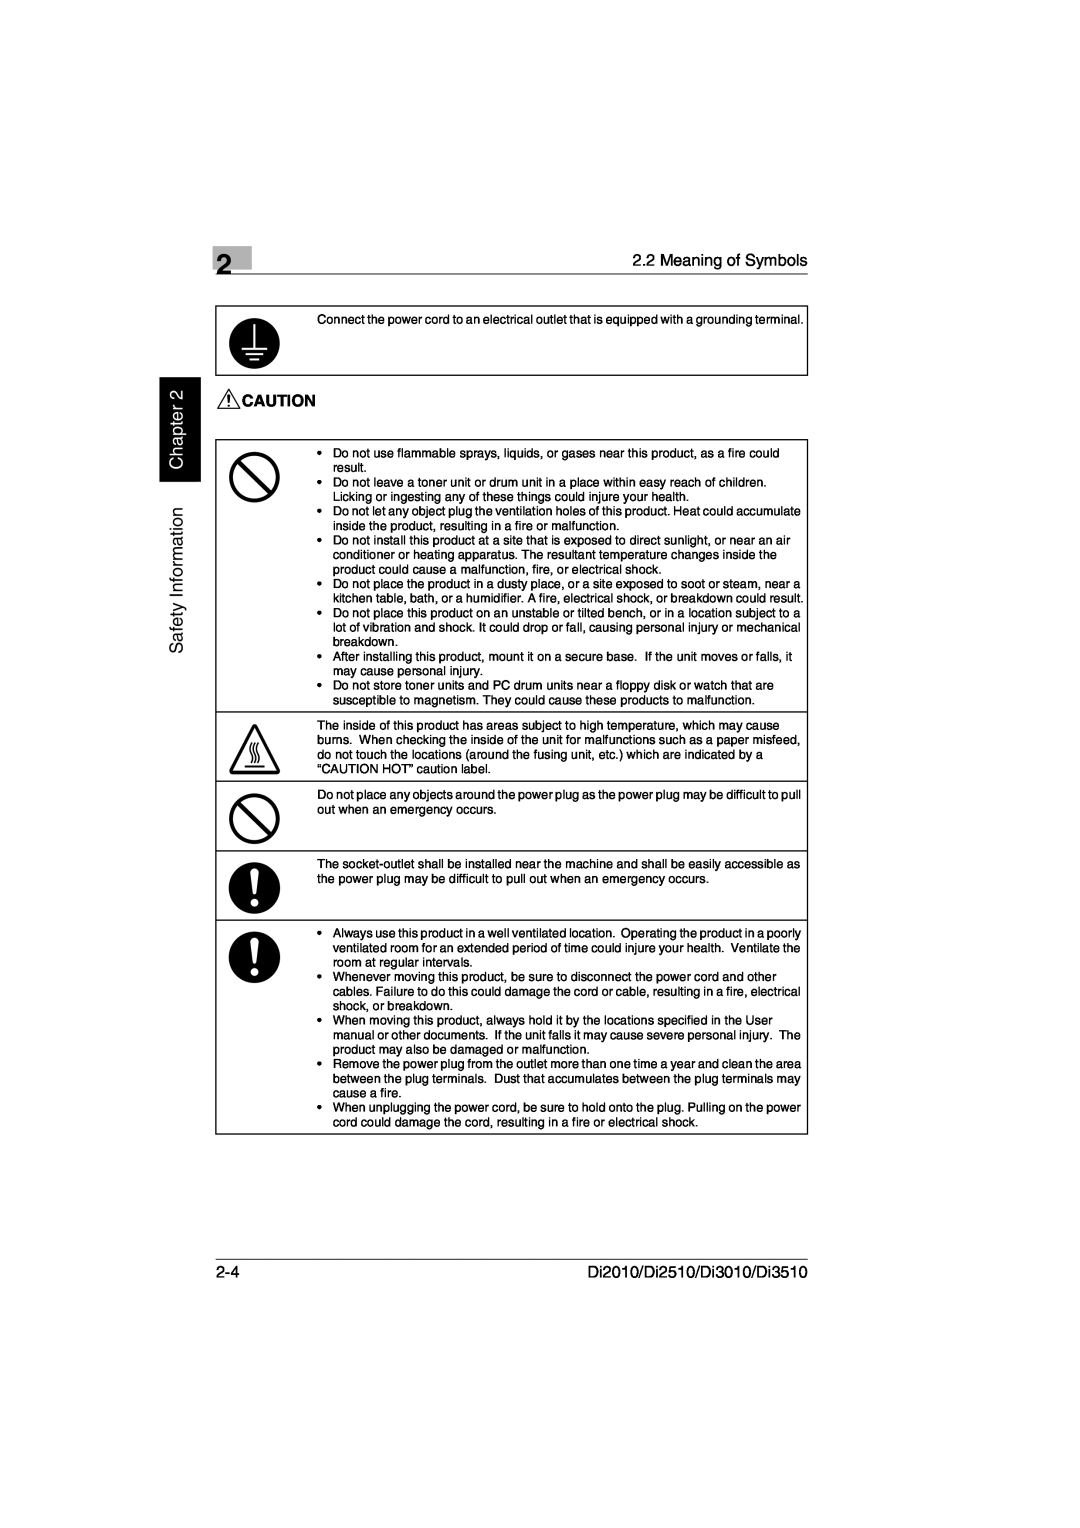 Minolta DI2510, DI2010, DI3010 user manual Safety Information Chapter, Meaning of Symbols, Di2010/Di2510/Di3010/Di3510 